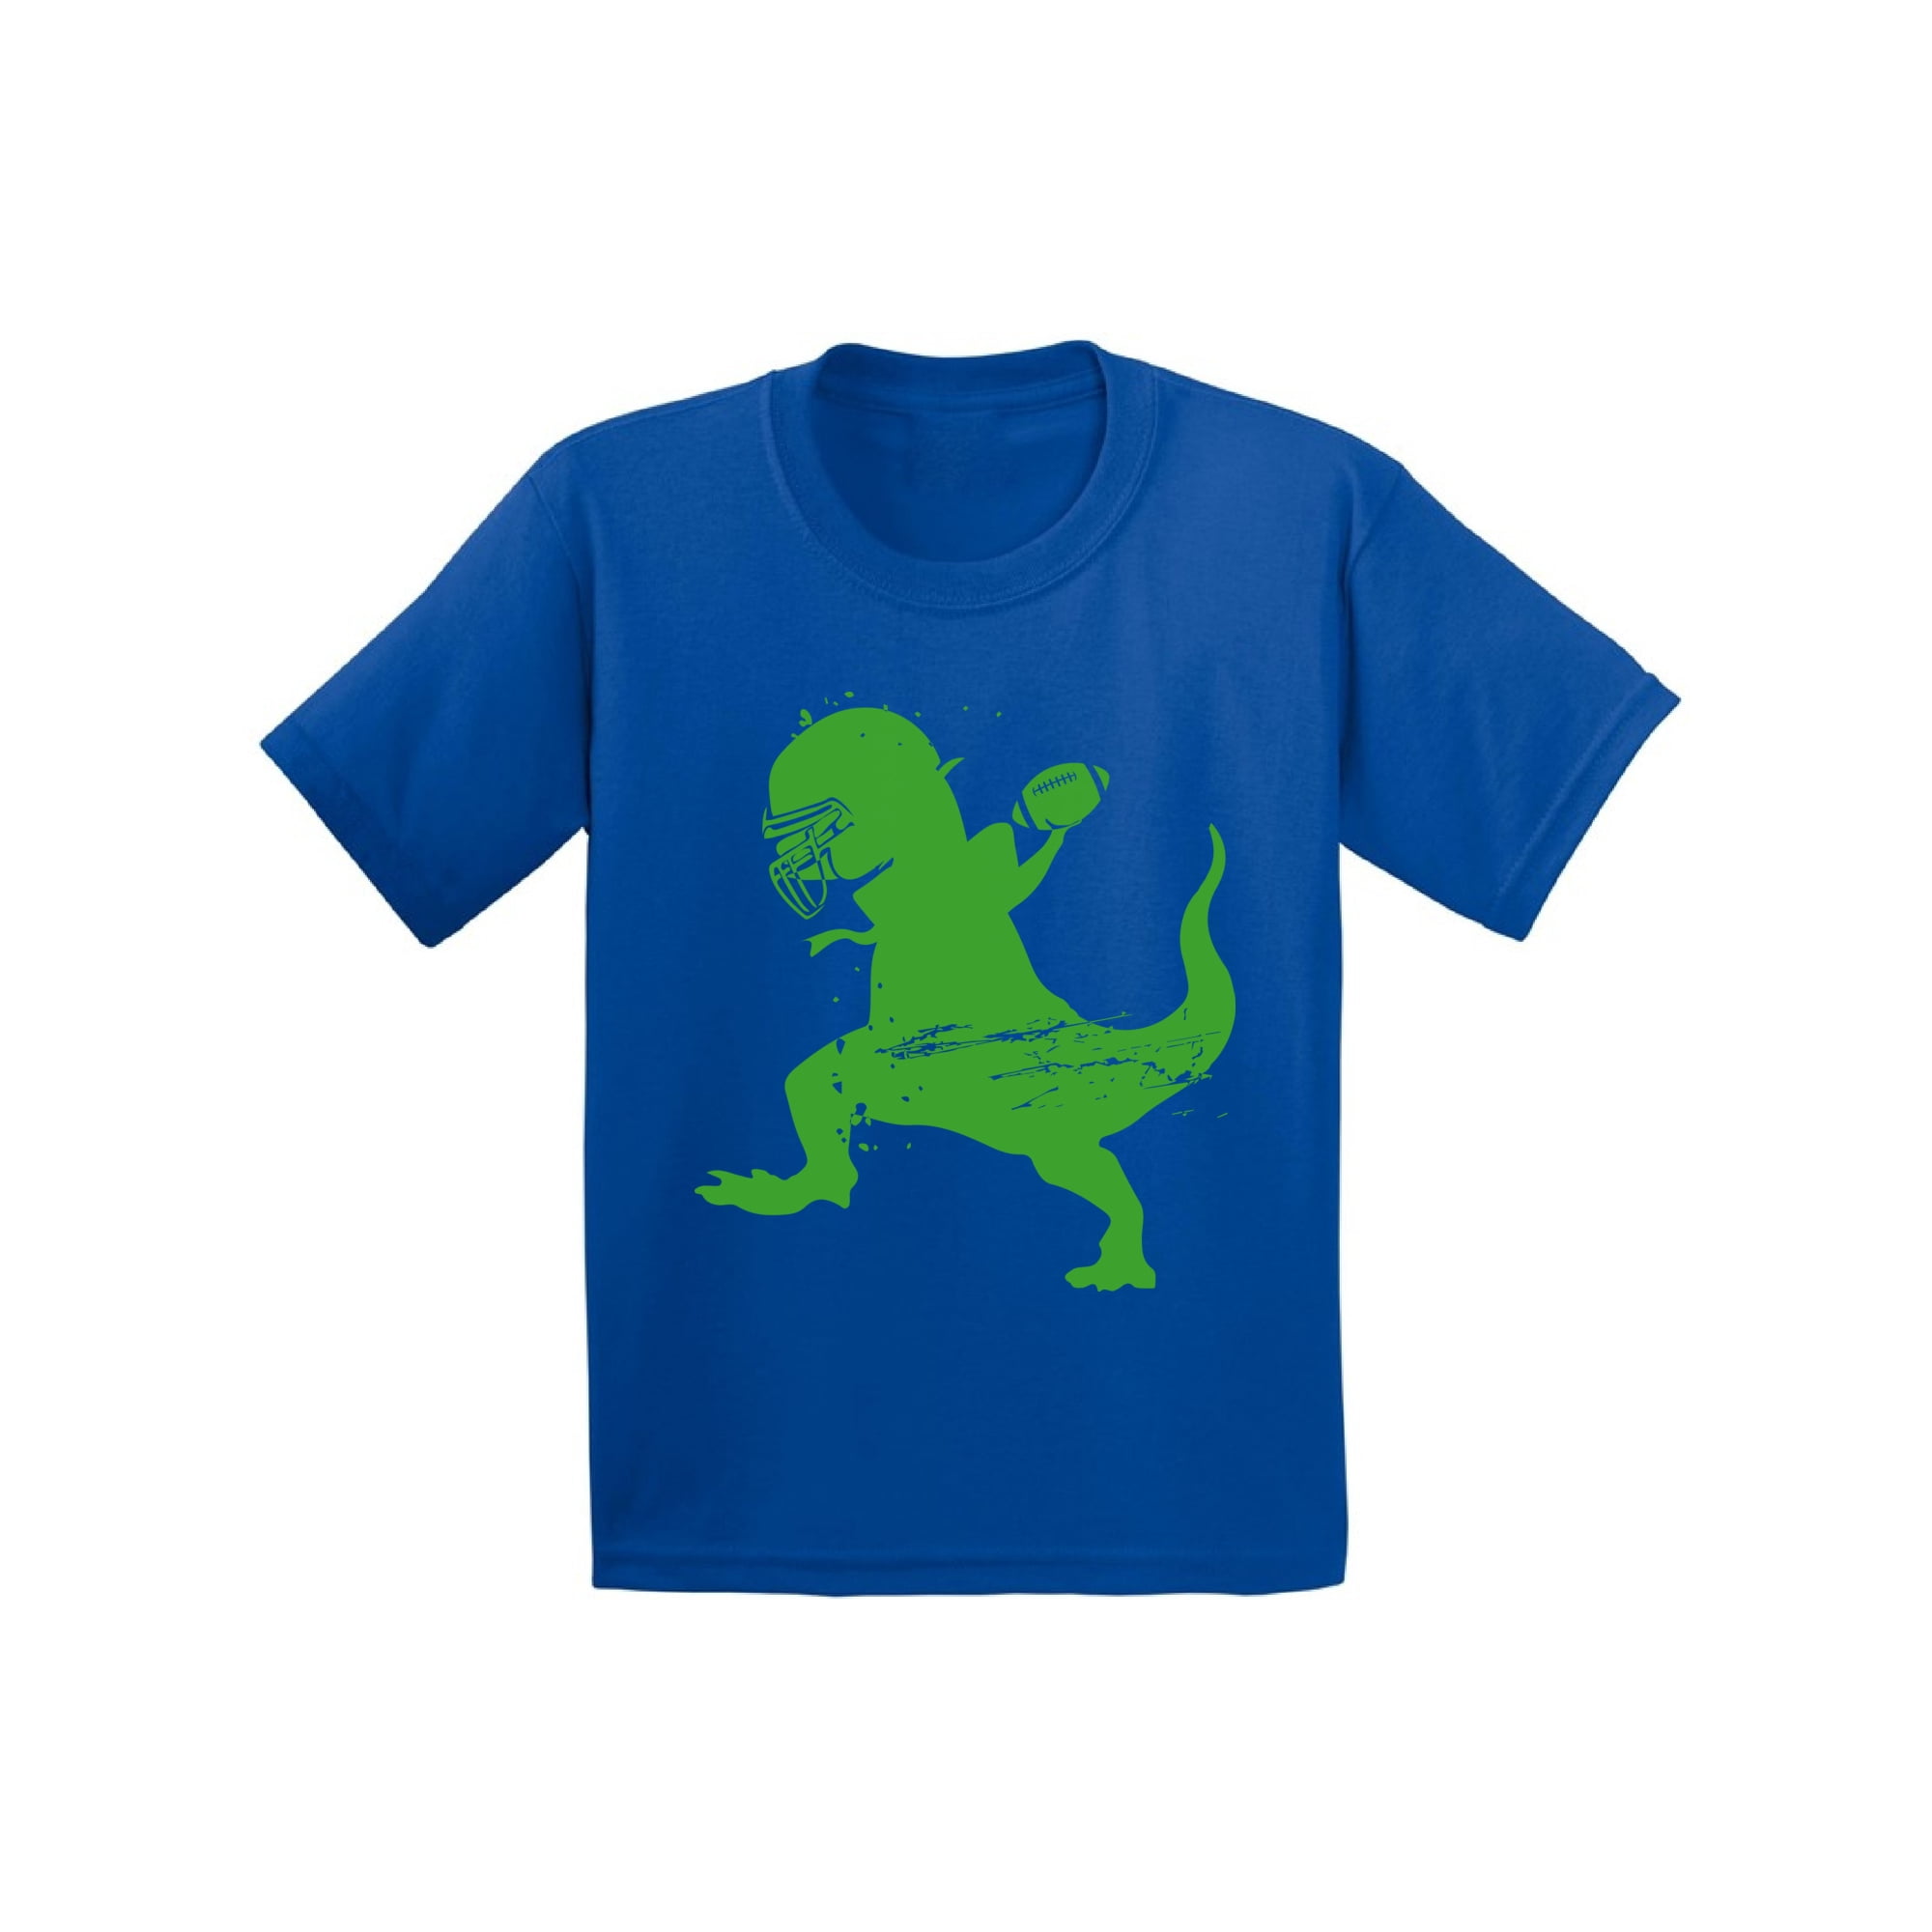 Awkward Styles American Football Dinosaur Toddler Shirt Dinosaur Shirt for Toddler Boy American Football Fans Football Outfit for Toddler Girl